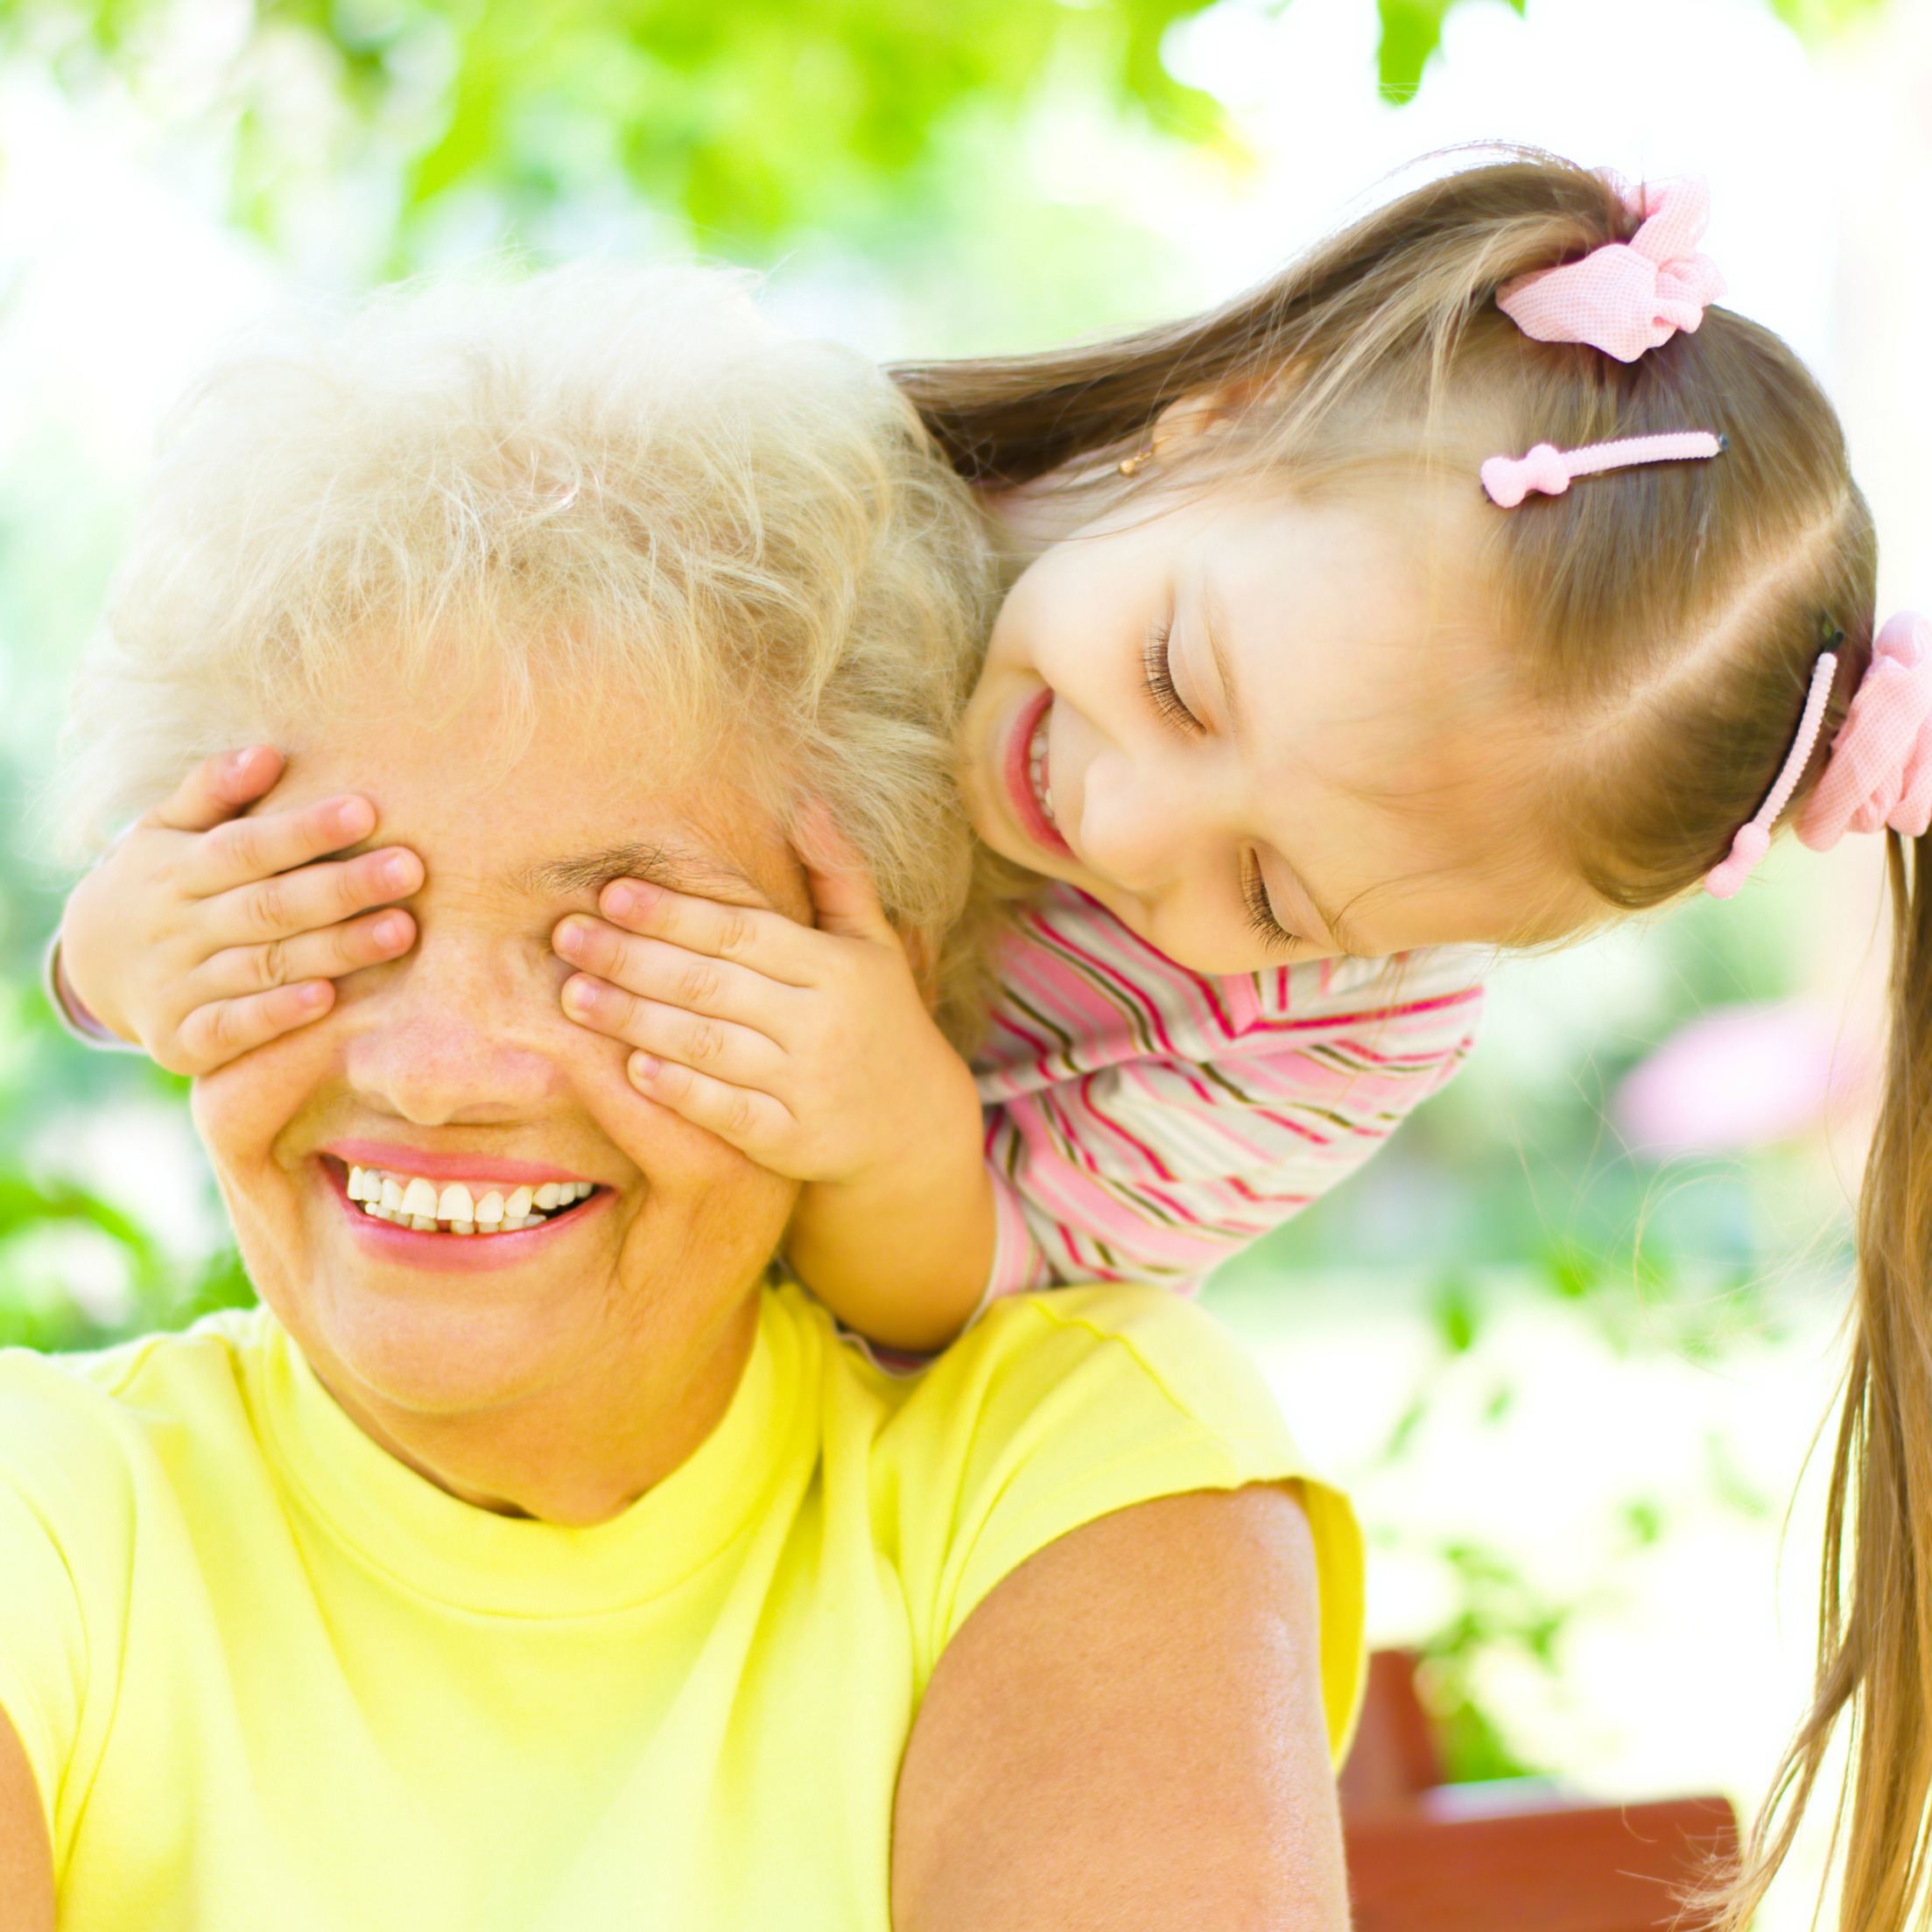 How to Make Grandparent Child Care Joyful for Everyone